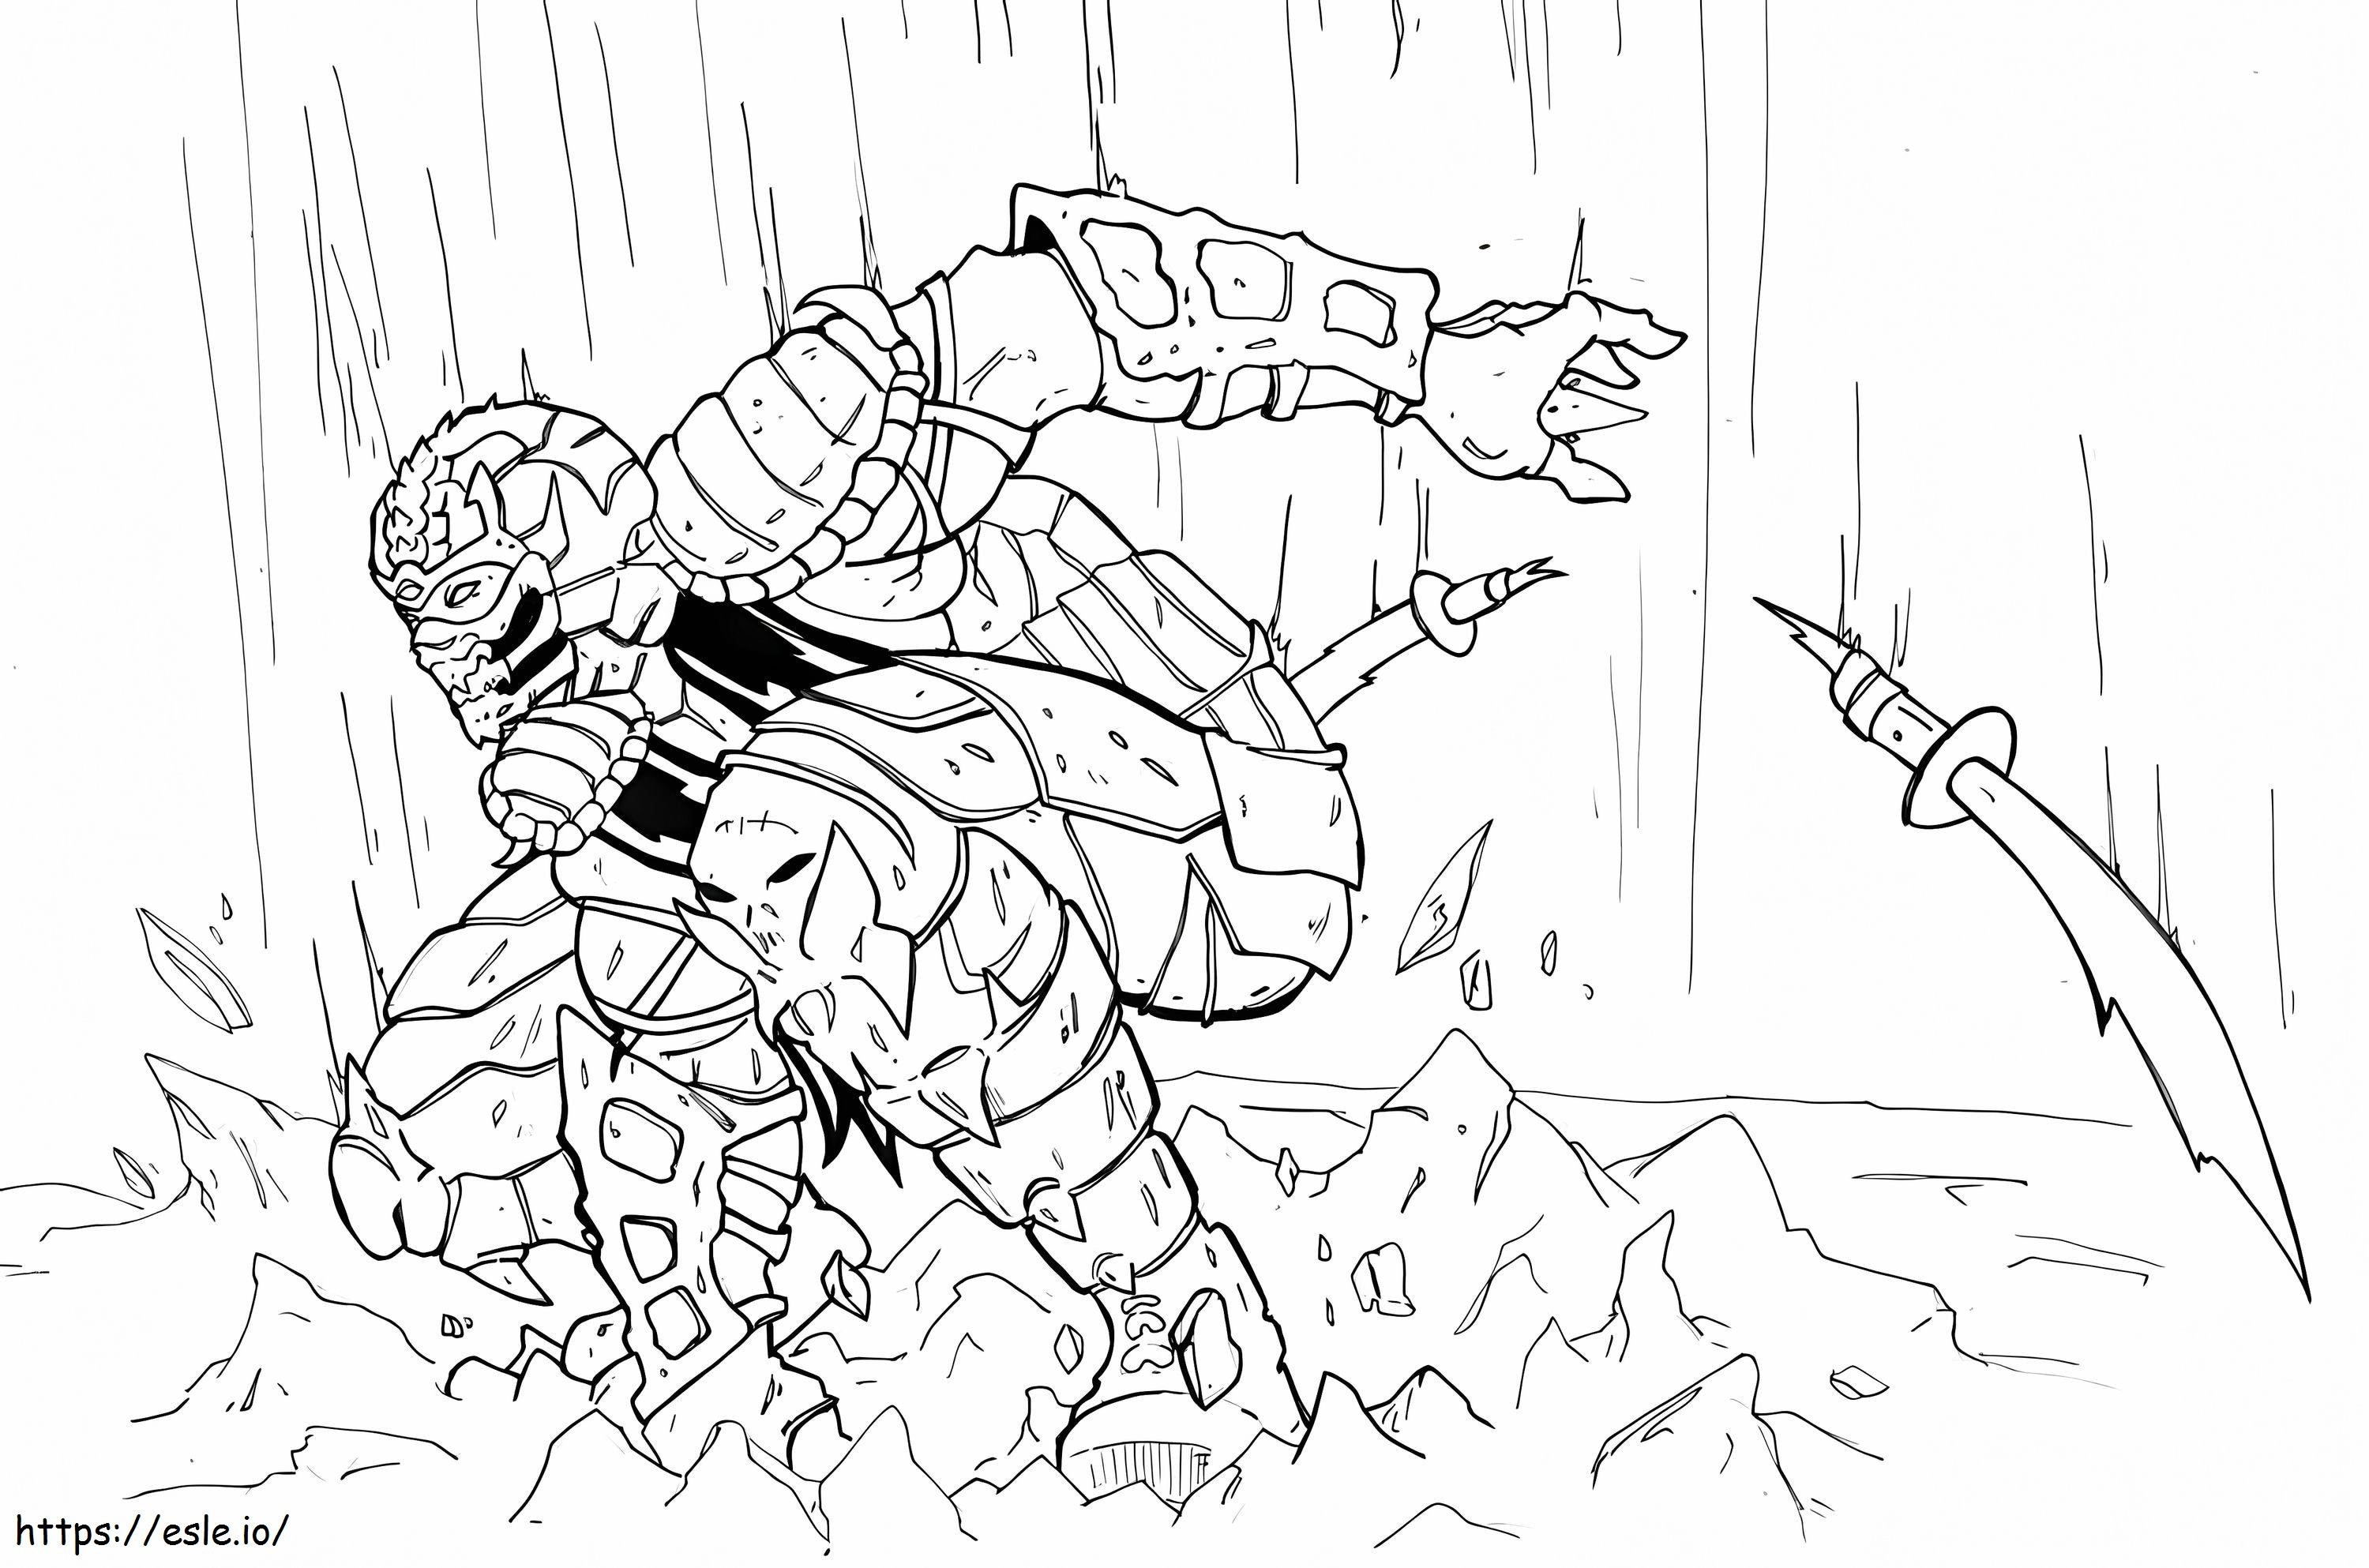 Skorpion Mortal Kombat 6 kolorowanka